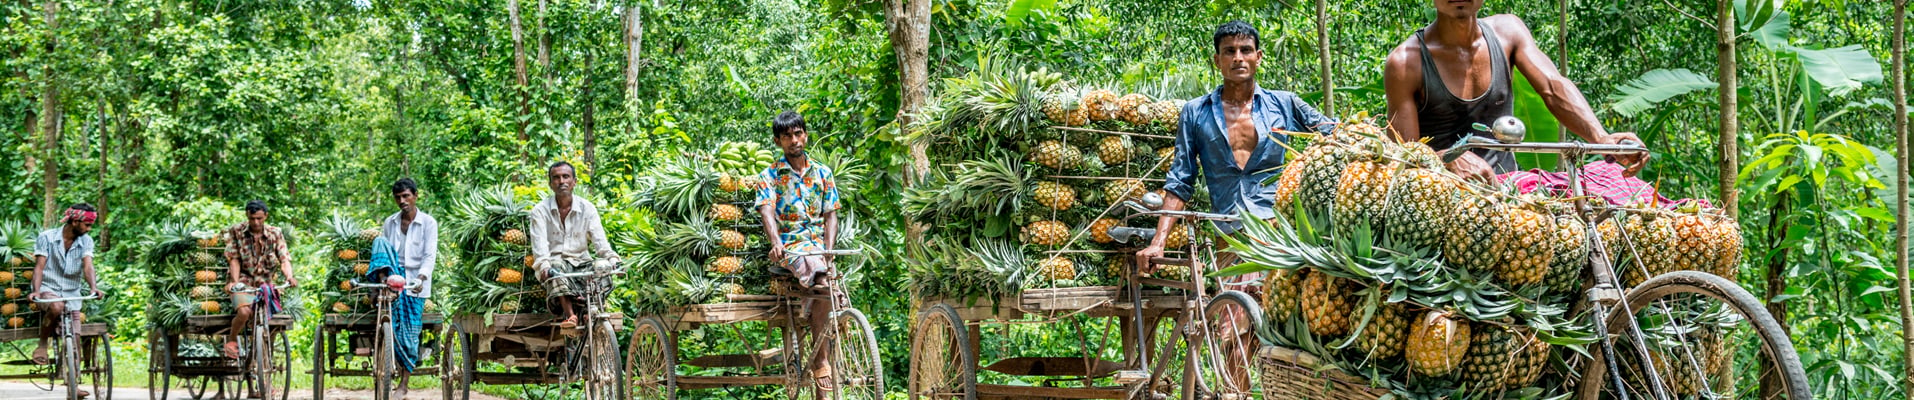 Pinapple Sellers in Dhaka, Bangladesh